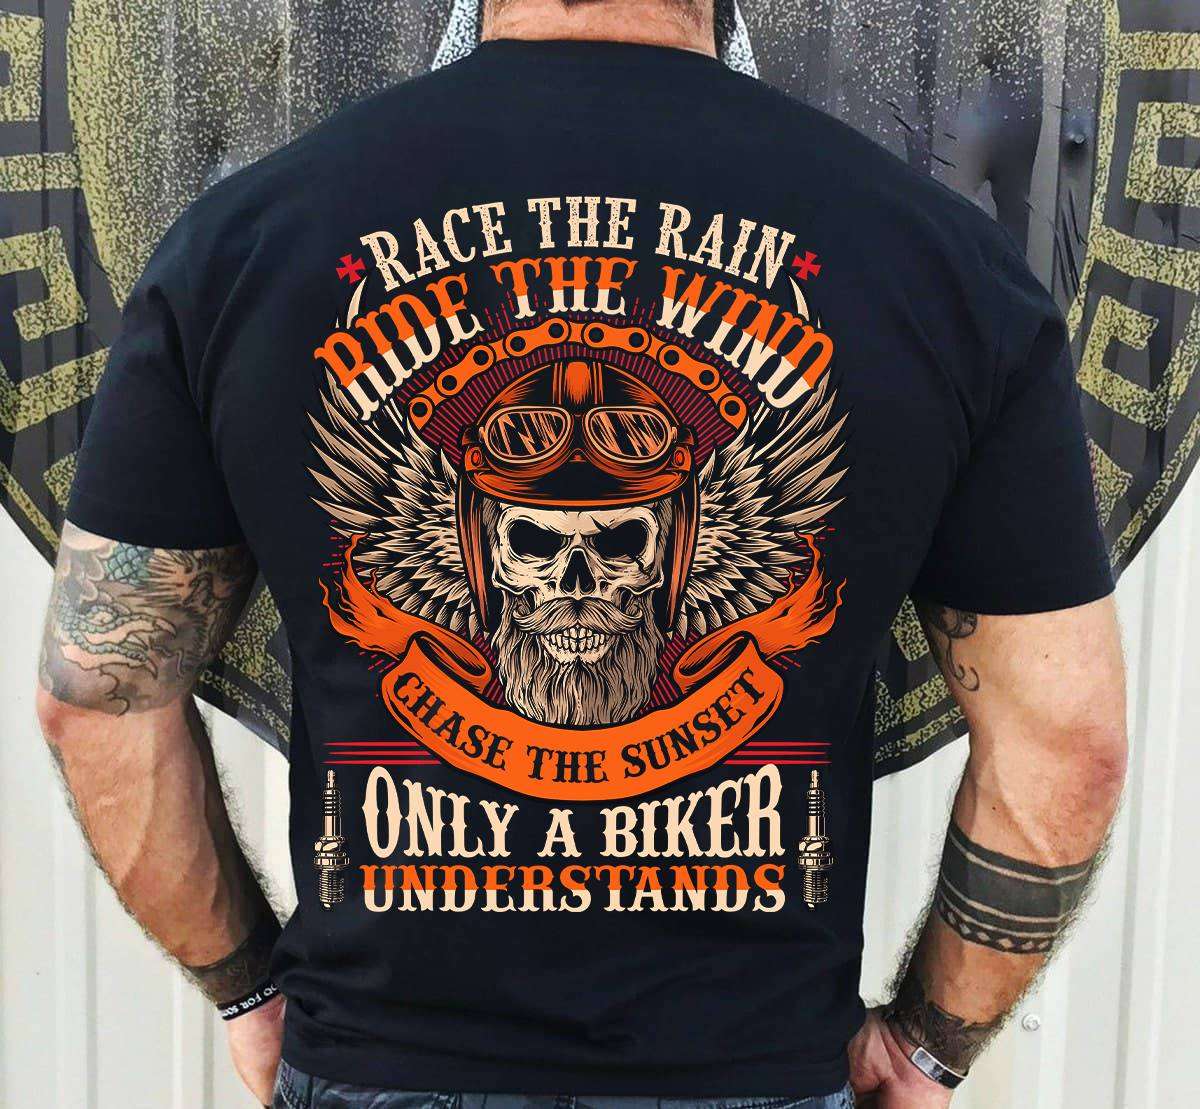 Race the rain, ride the wind, chase the sunset, only a biker understands - Halloween skull biker